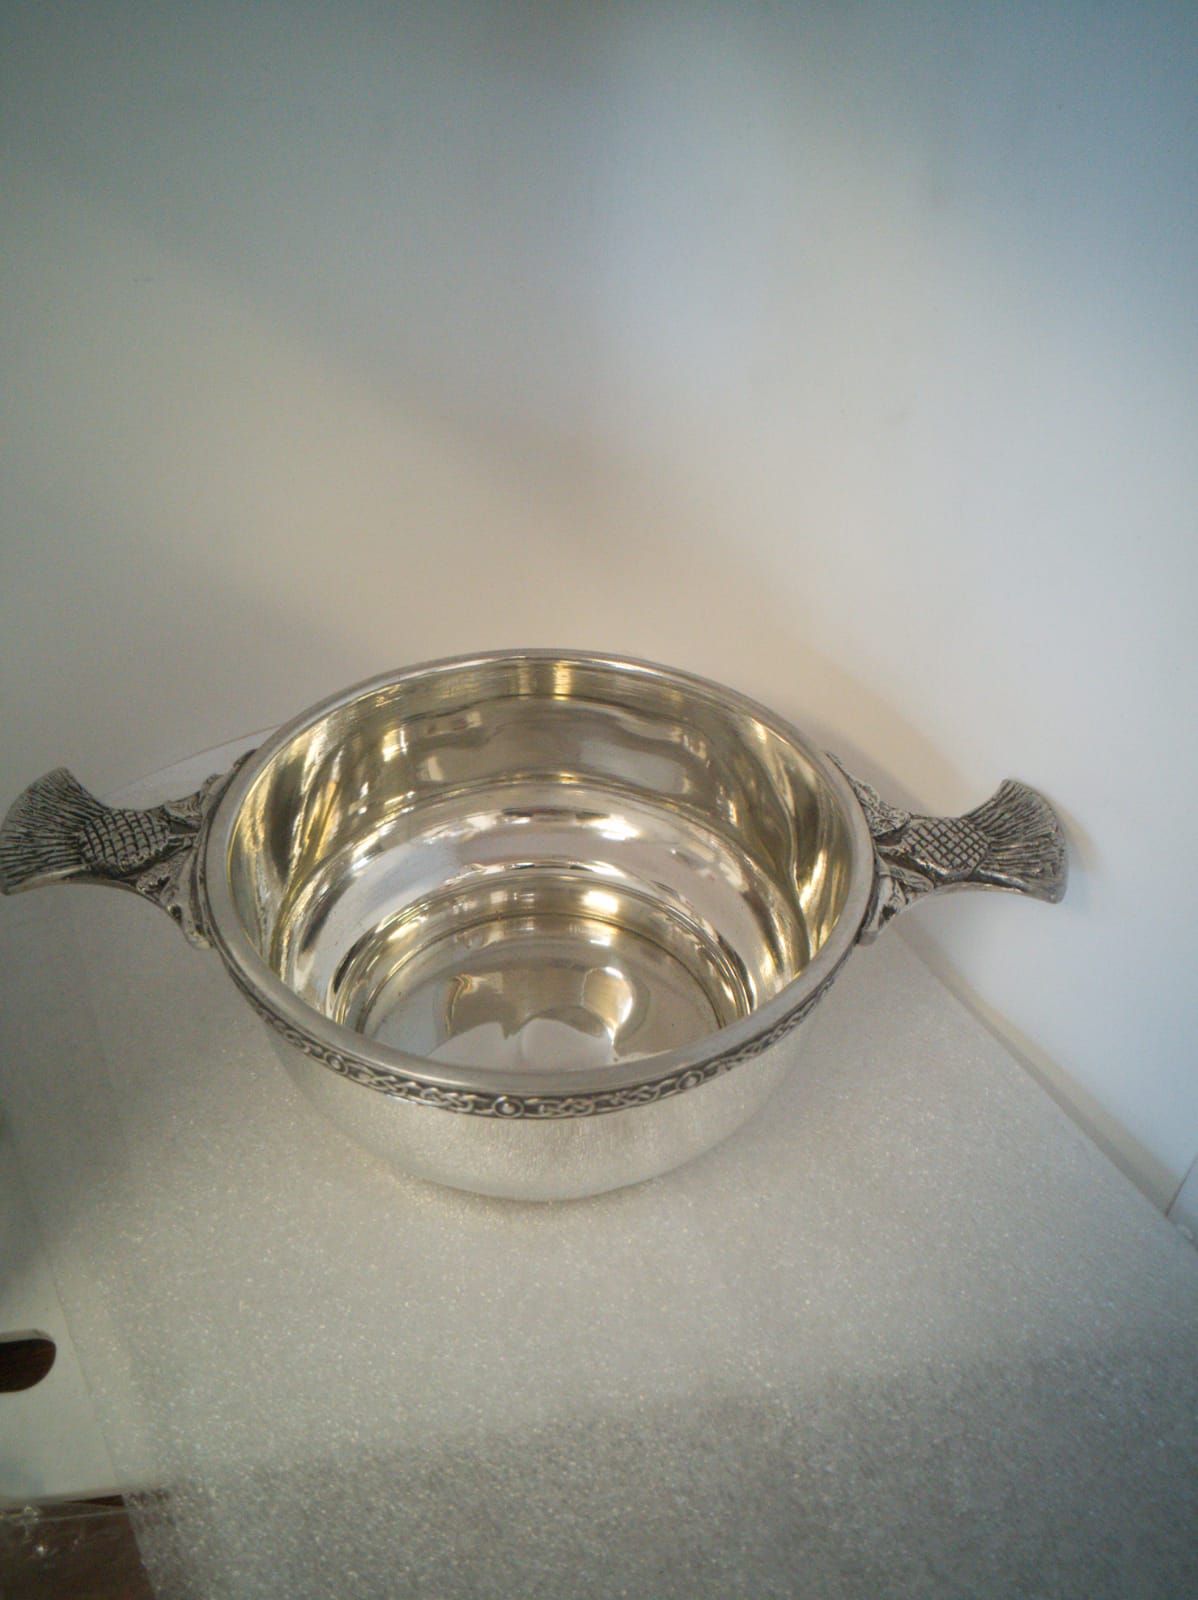 QB002 pewter celtic quaich bowl with thistle handle